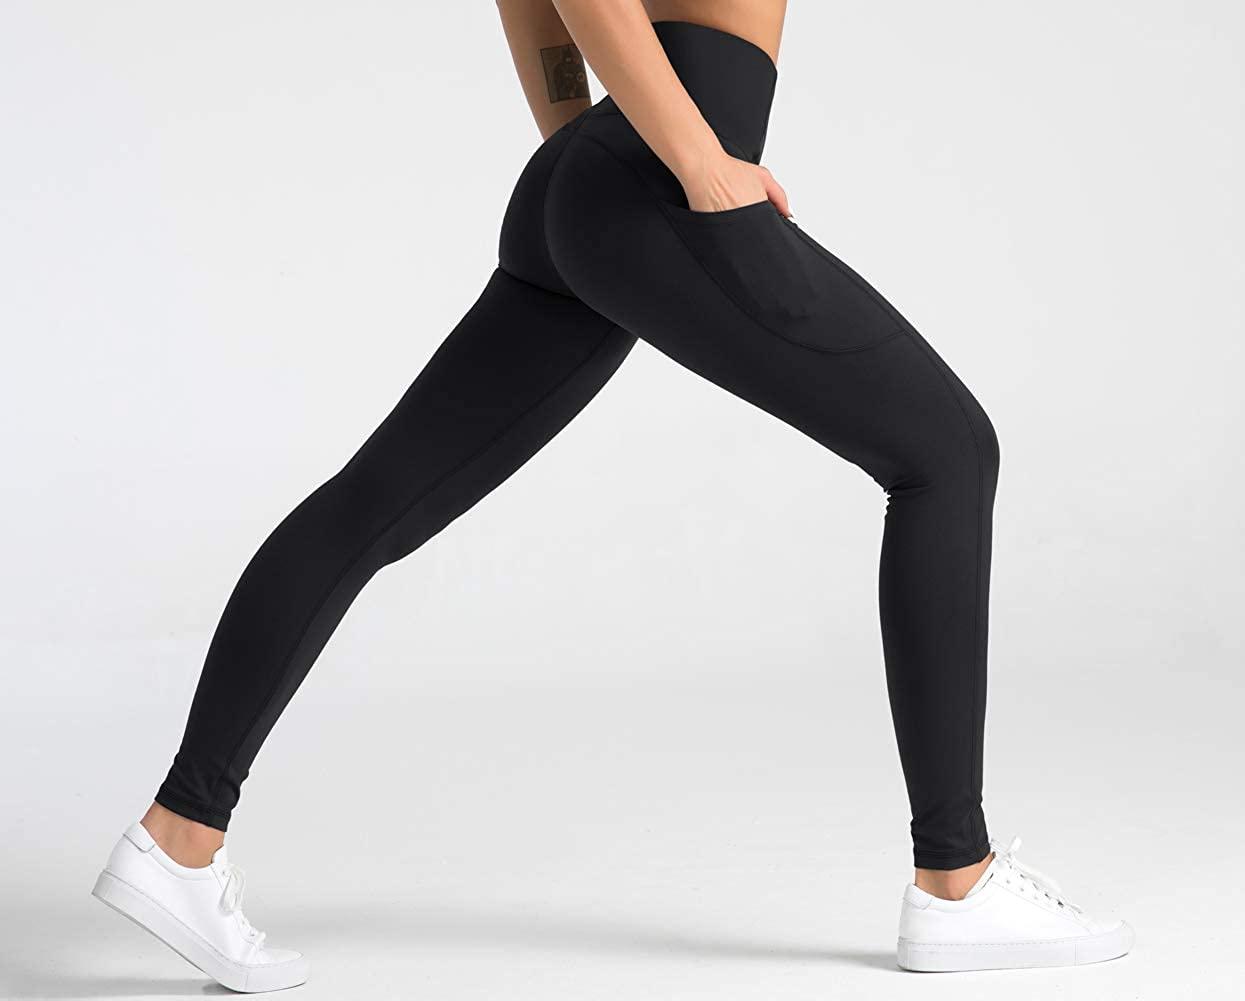 UURUN High Waist Yoga Pants Workout Running Leggings with Pockets -  Non-See-Thro